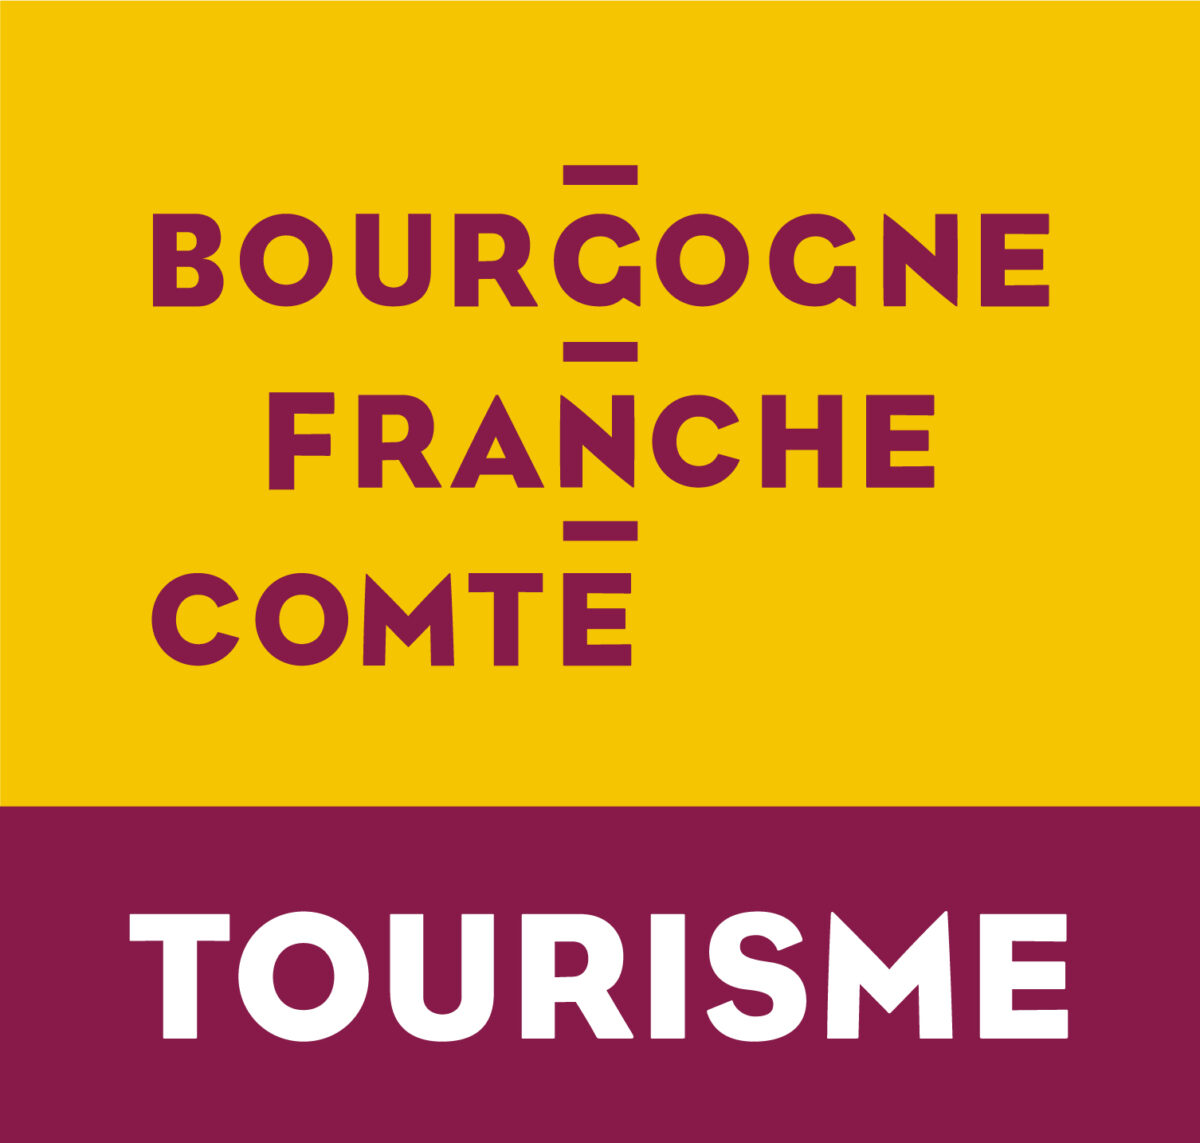 Bourgogne France Comté Tourisme